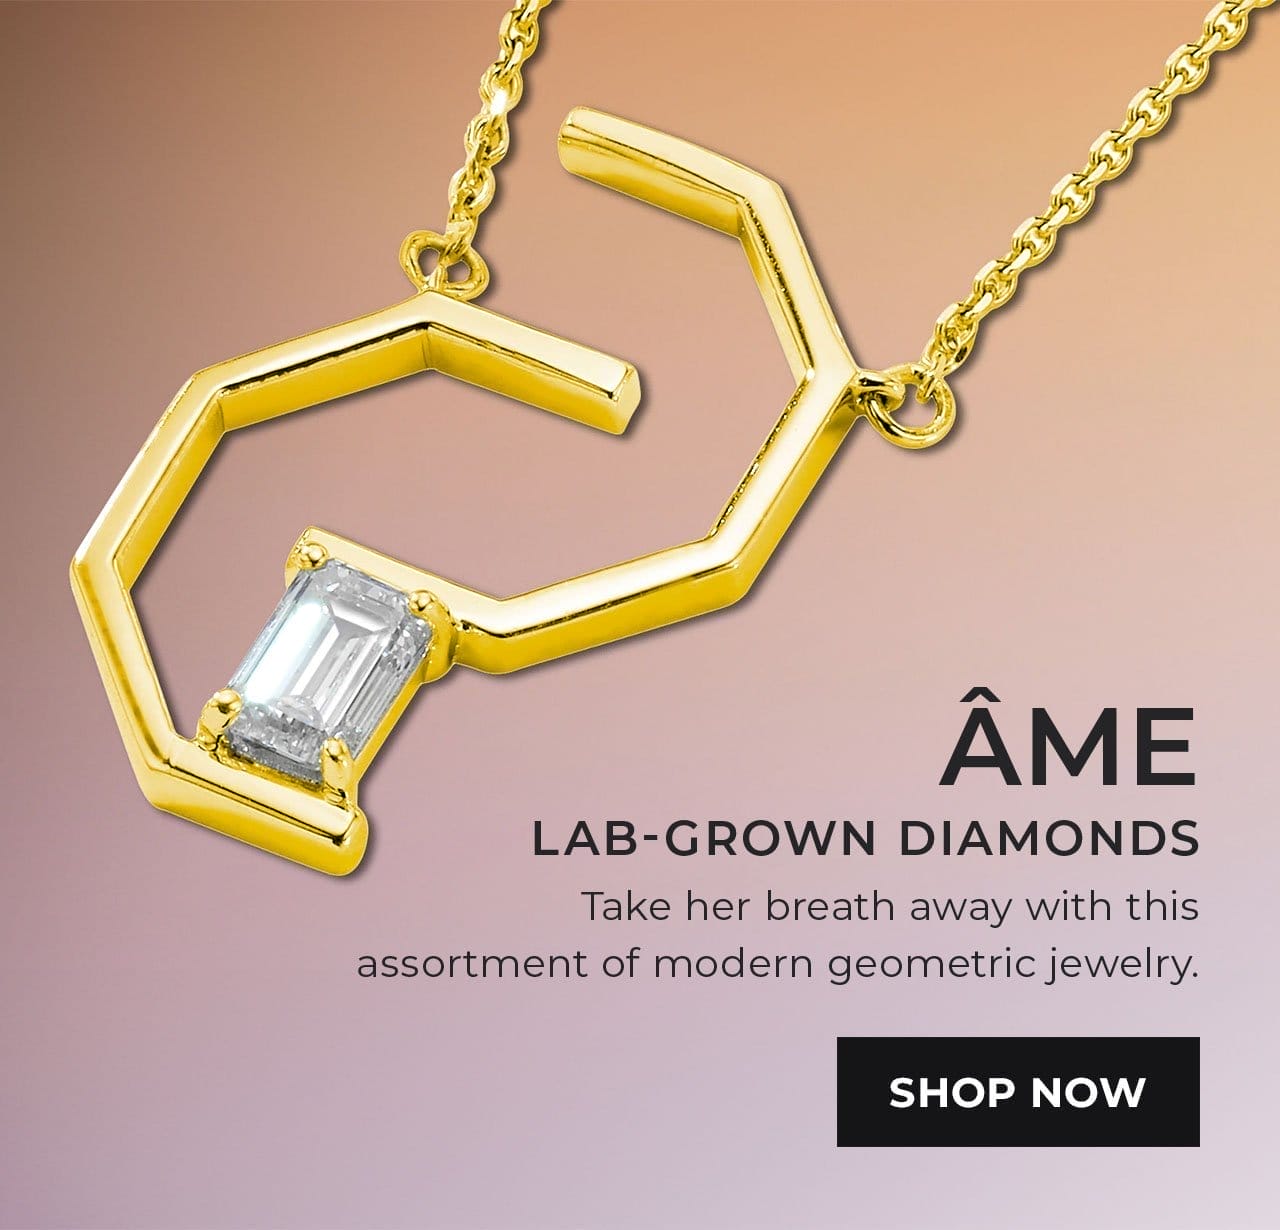 Âme Lab-Grown Diamonds | SHOP NOW